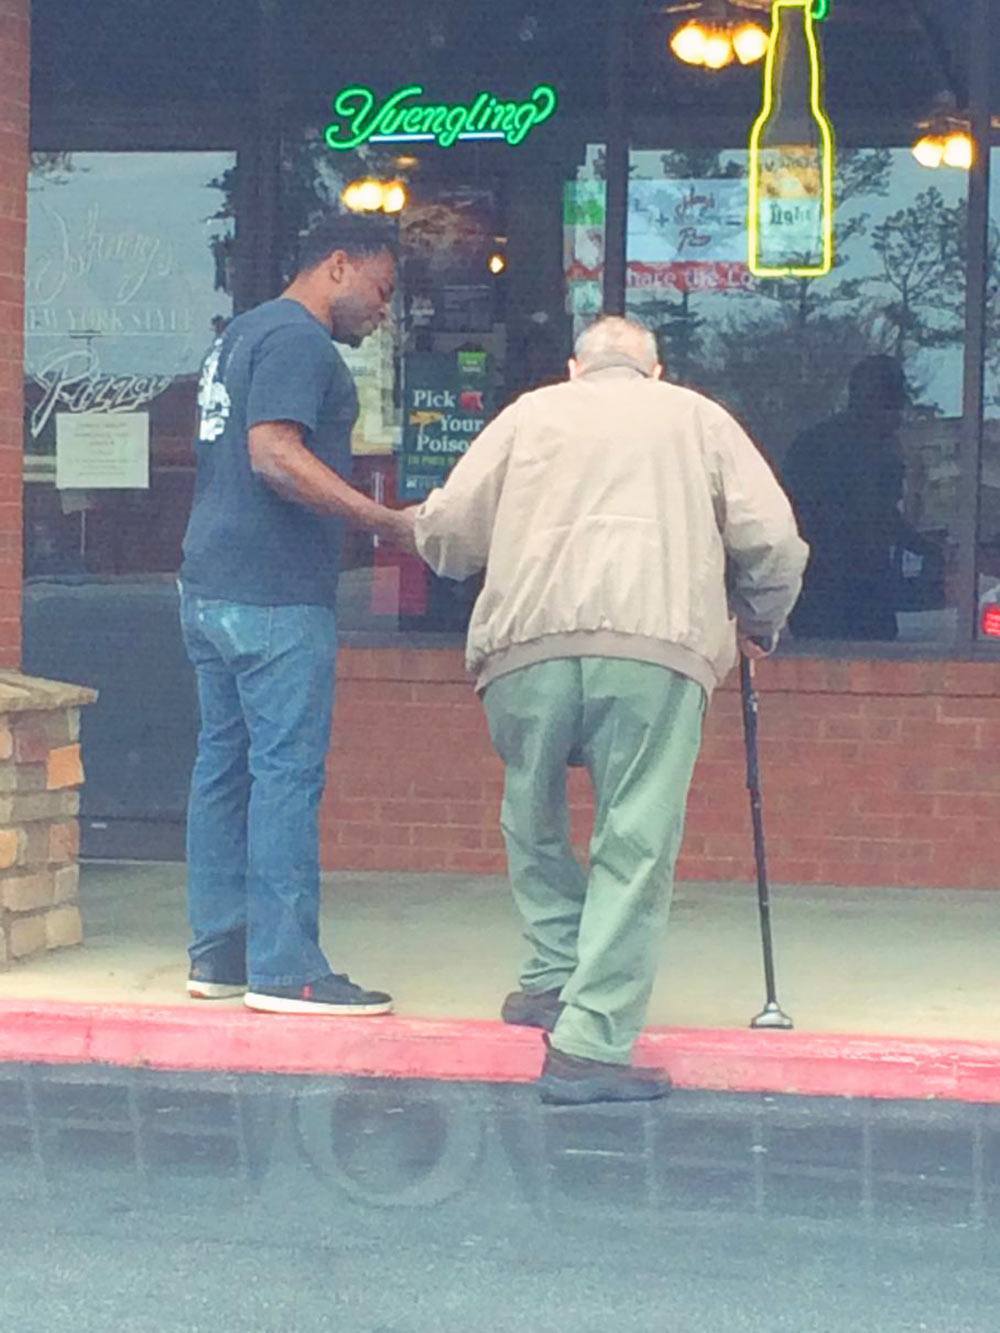 Photo shows Johnny’s New York Style Pizza employee helping elderly man cross the street.